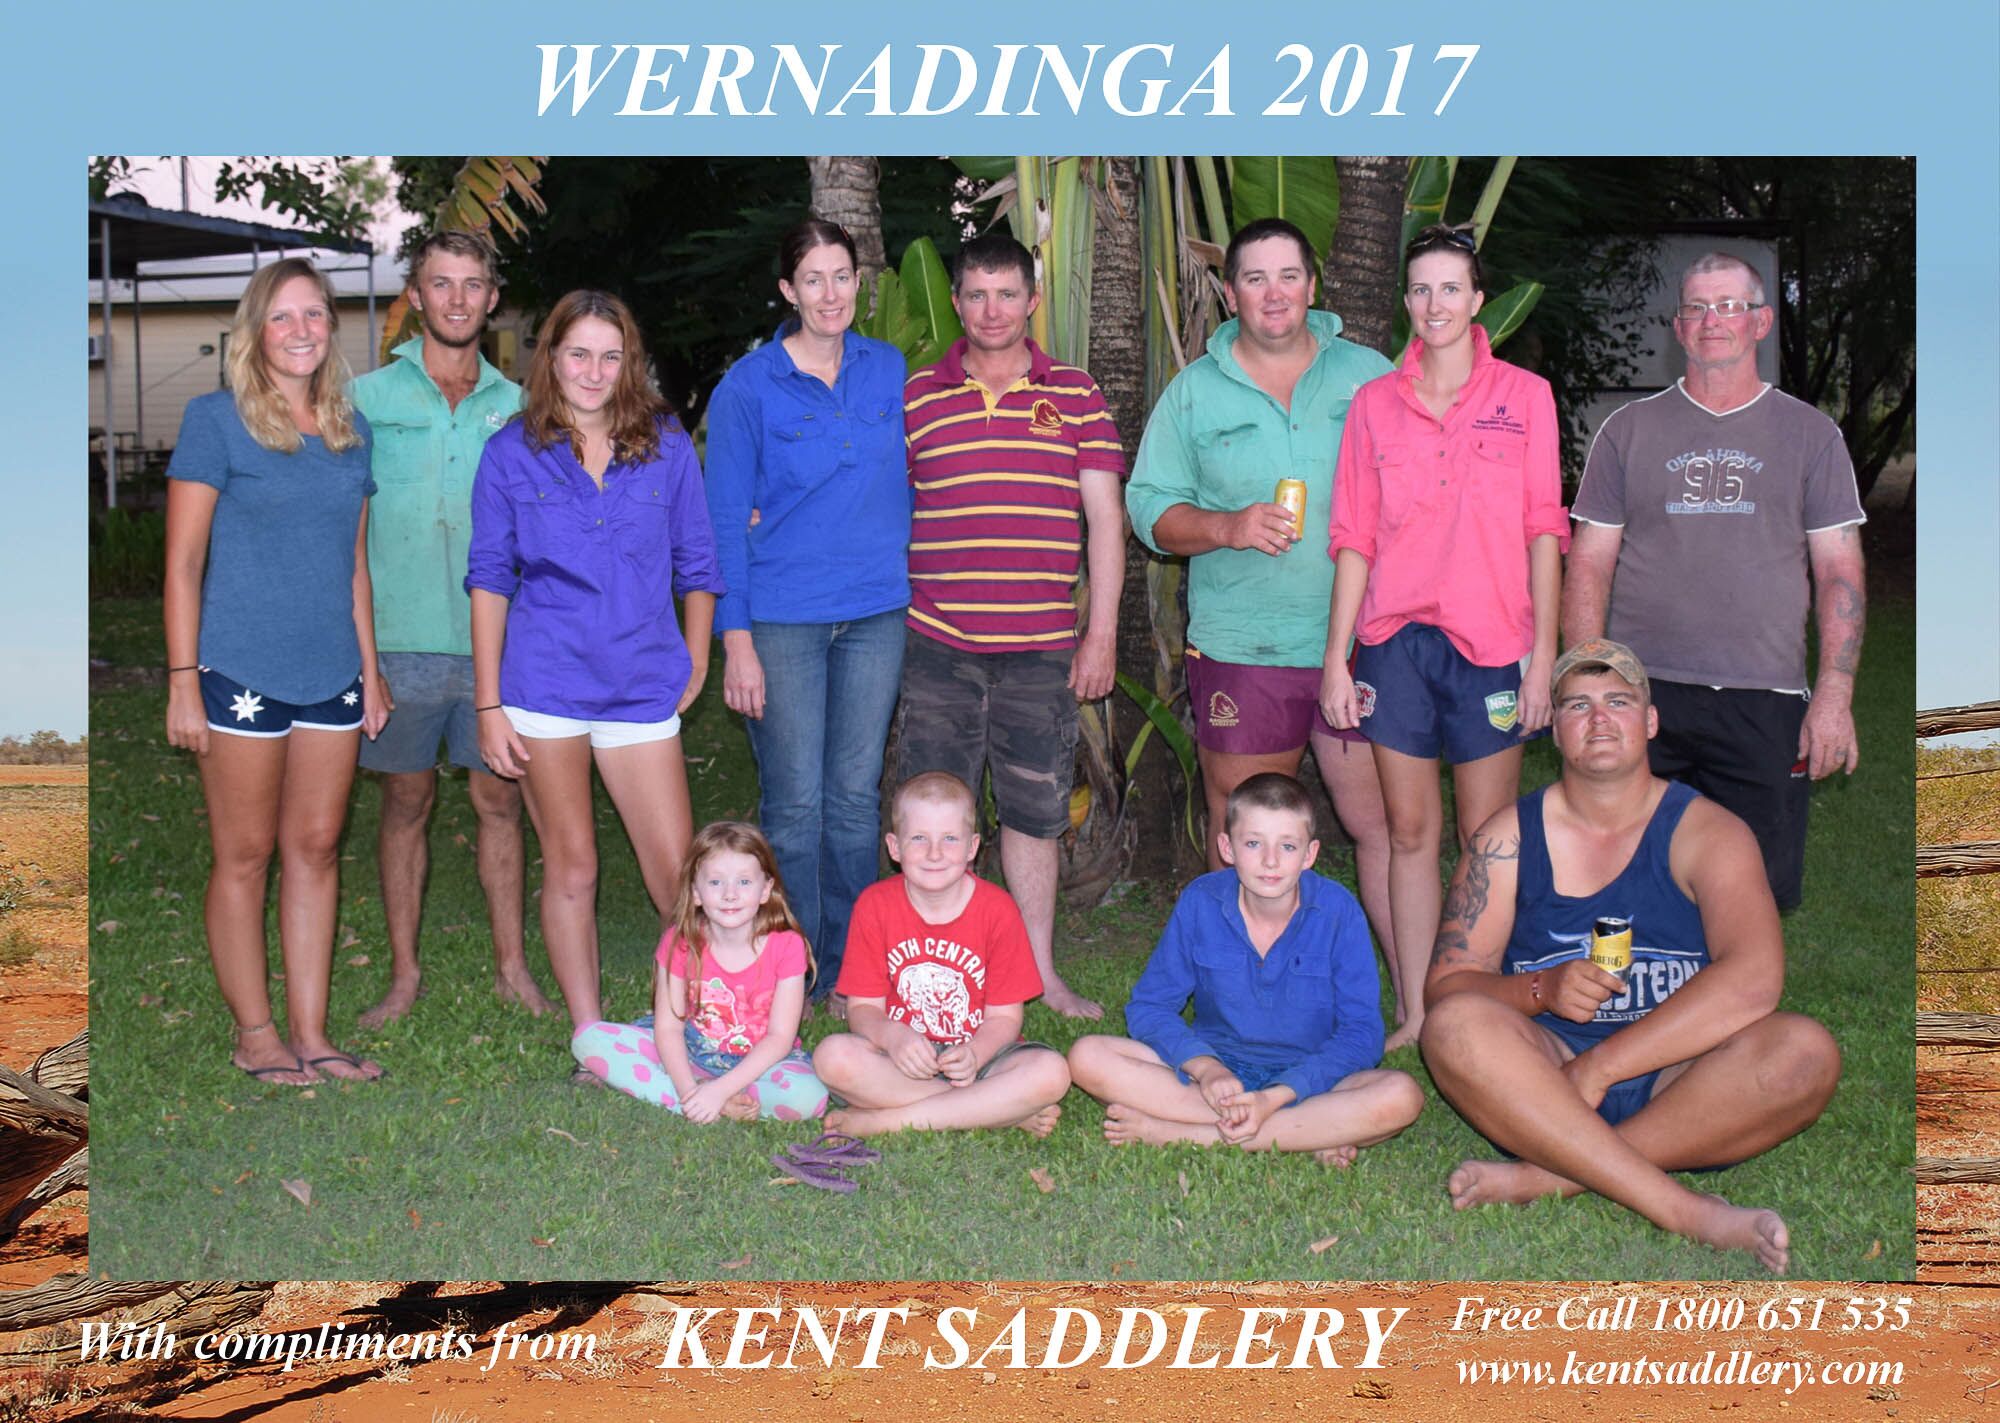 Queensland - Wernadinga 36